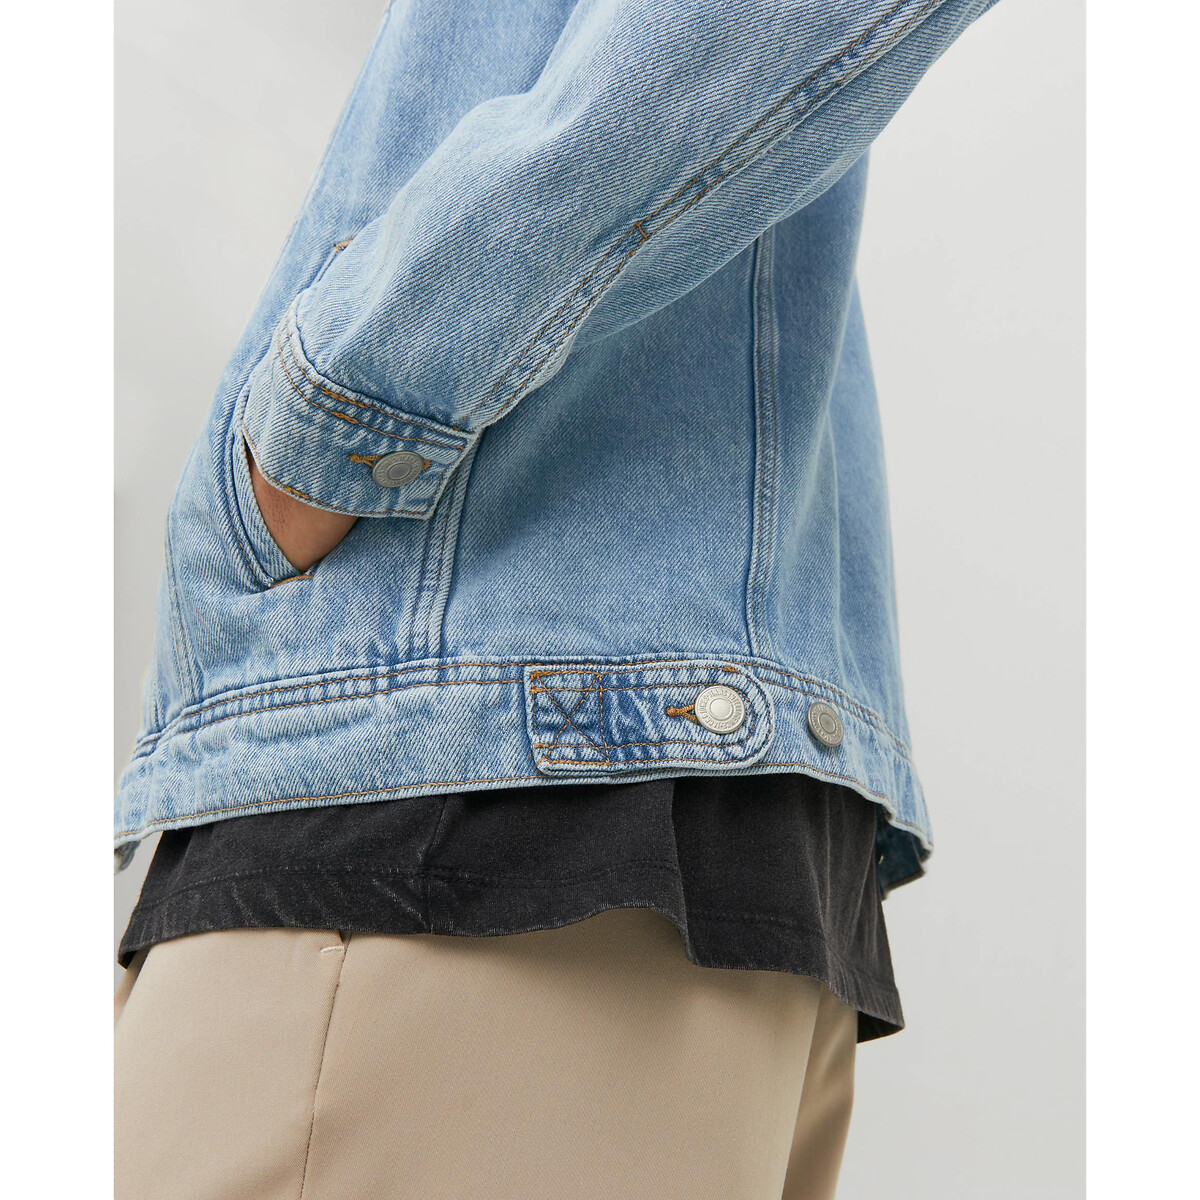 Куртка Из джинсовой ткани XXL синий LaRedoute, размер XXL - фото 4